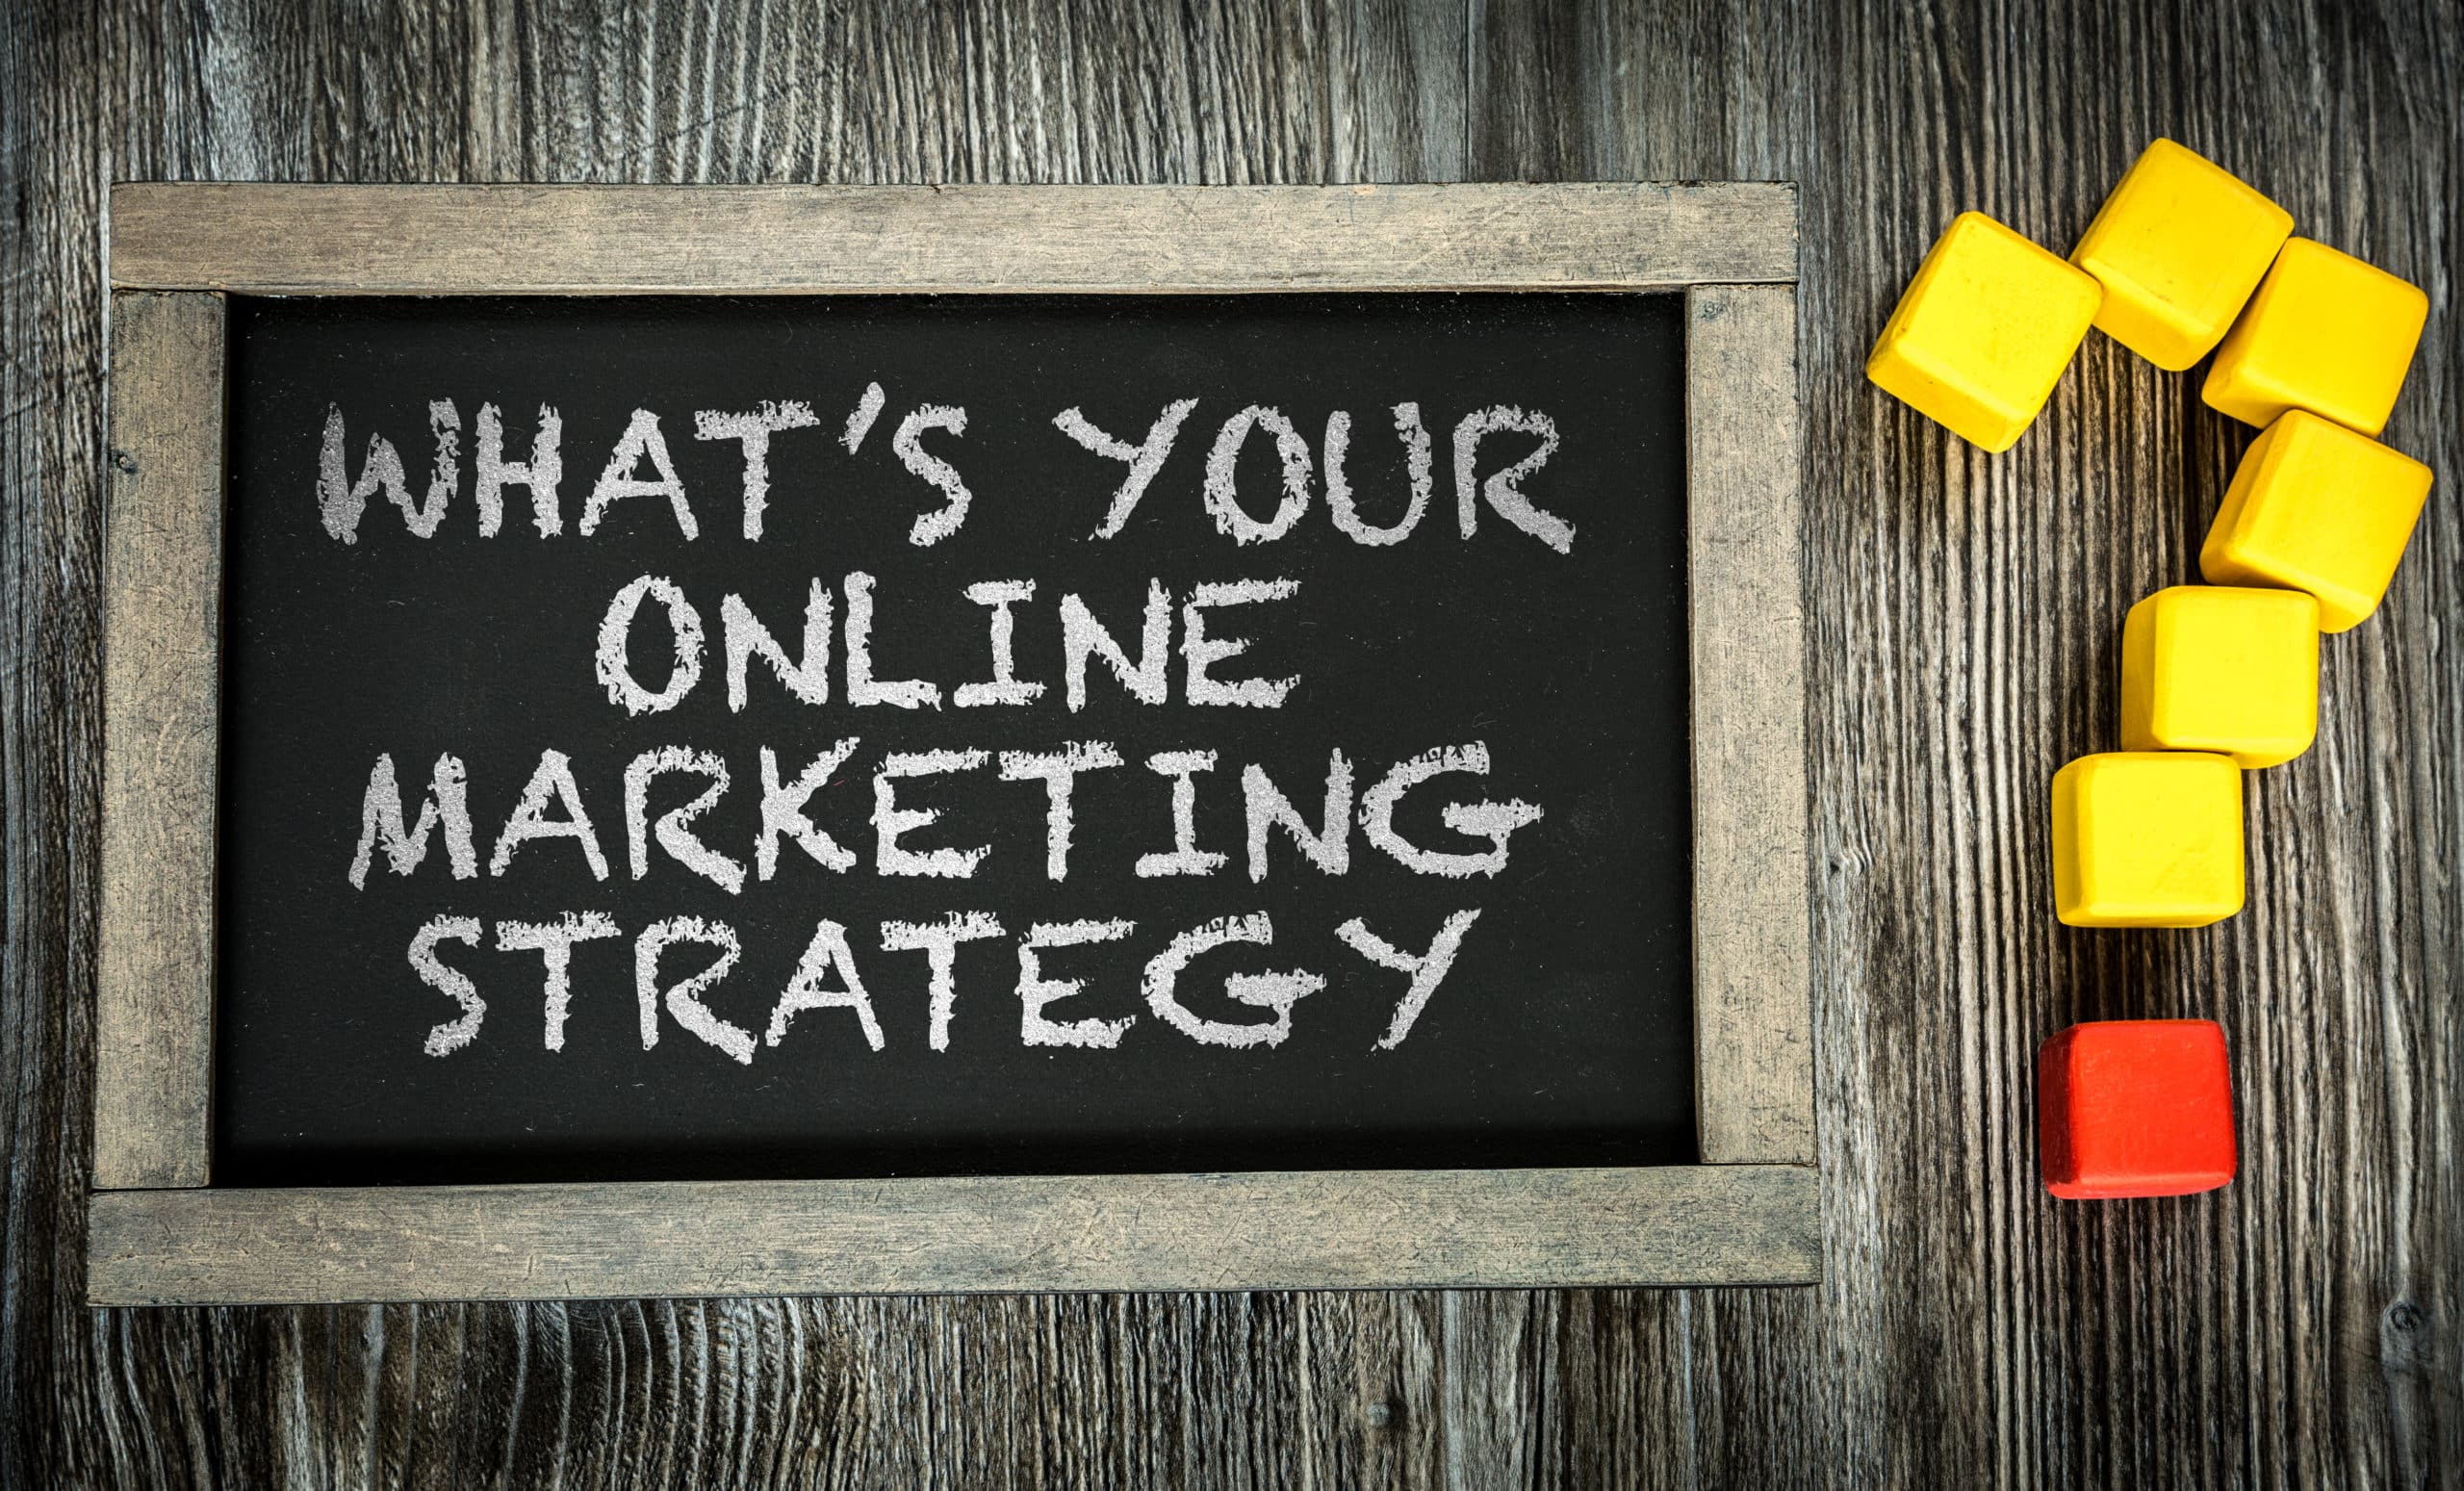 online marketing strategy